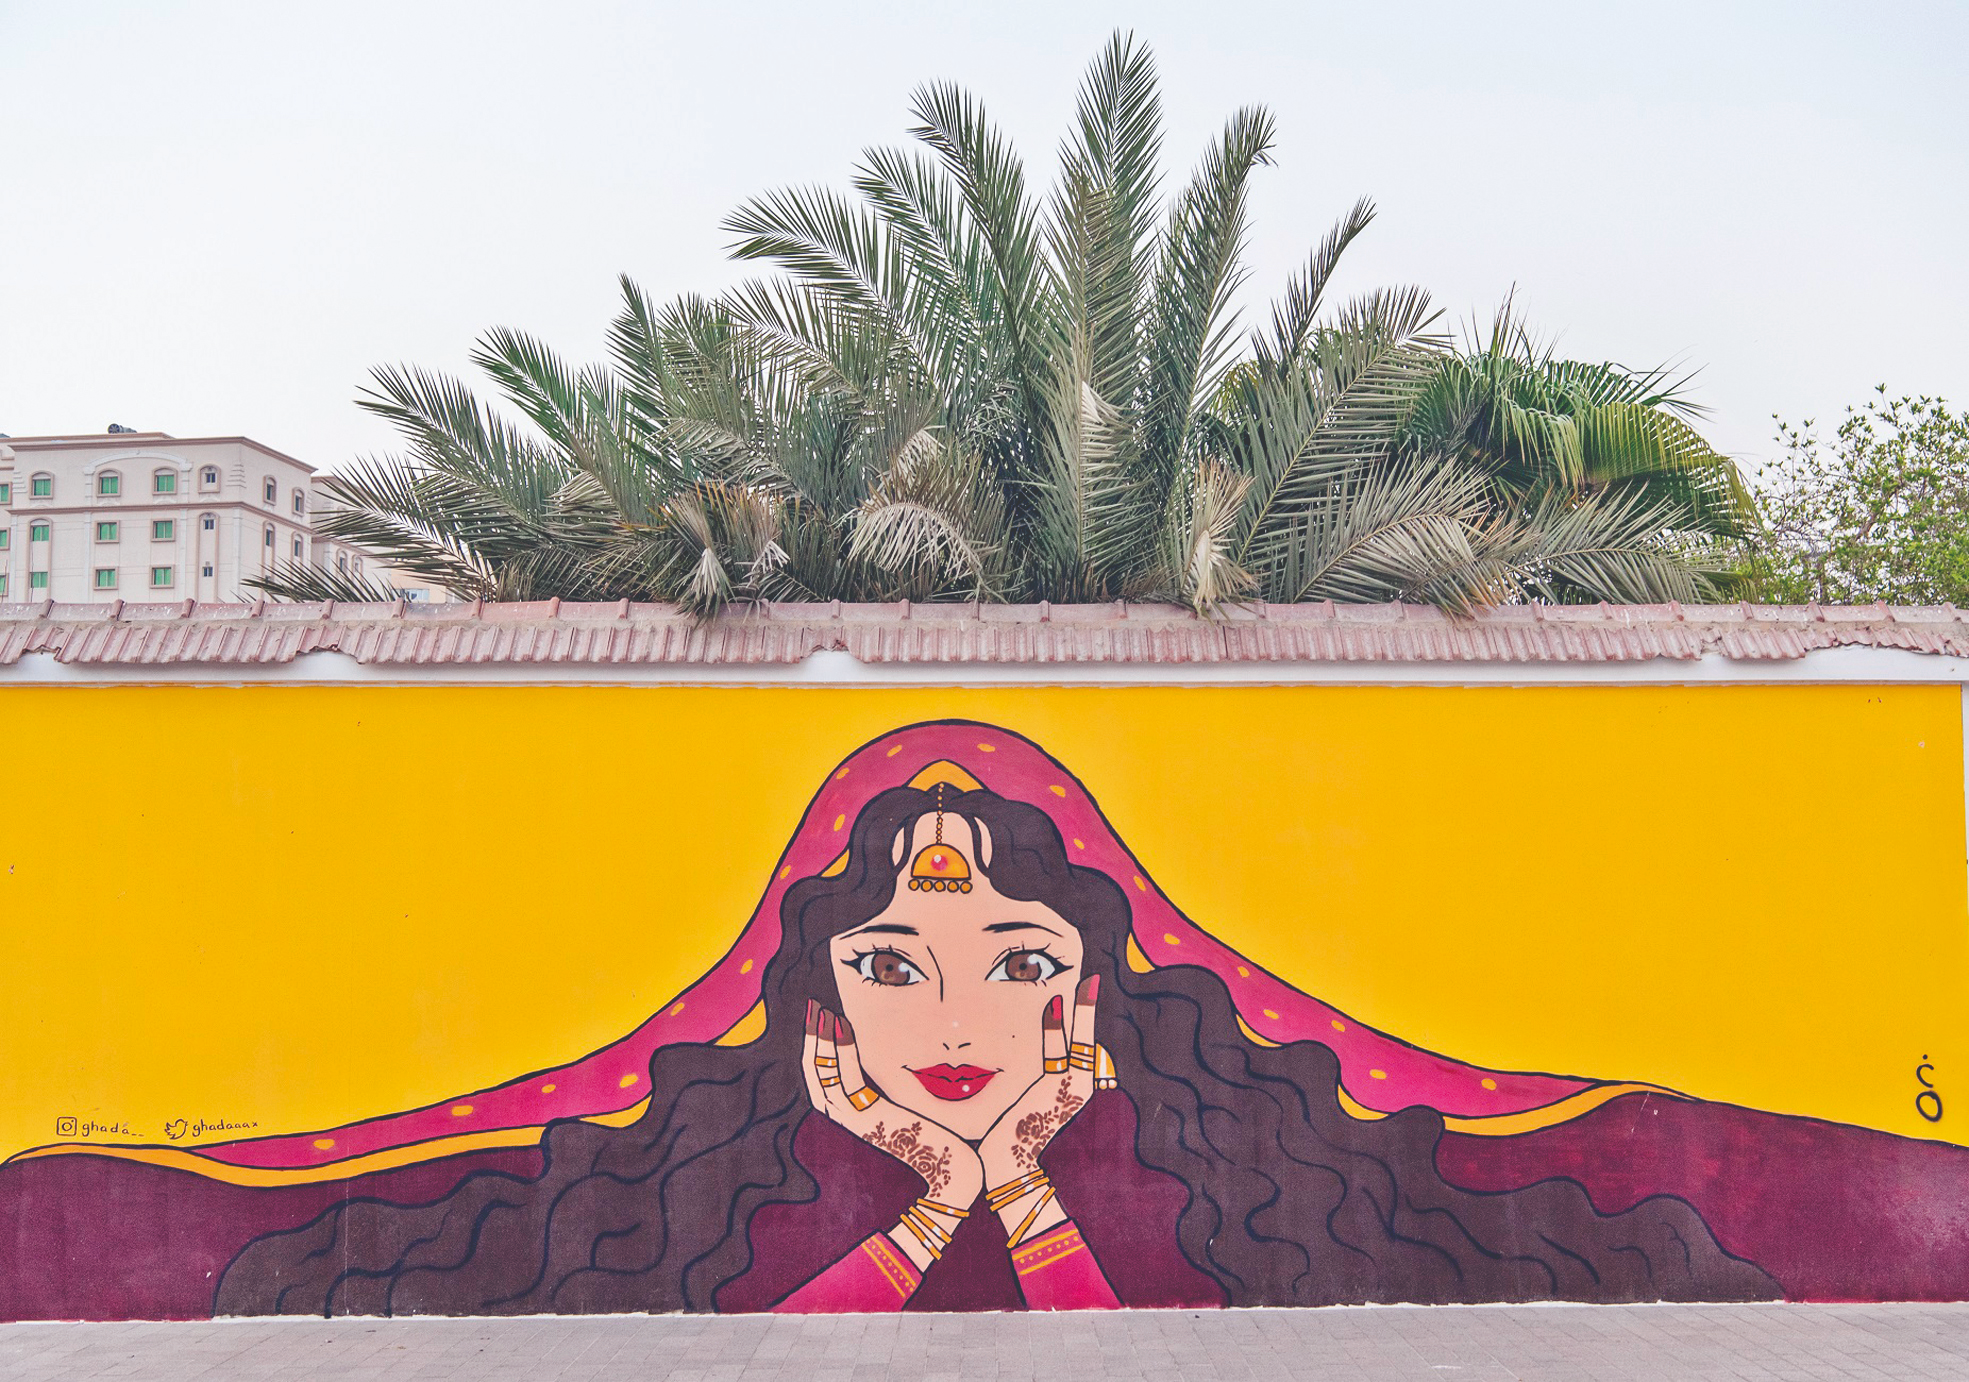 Qatar Museums Launches New Vision of 'Jedari Art'